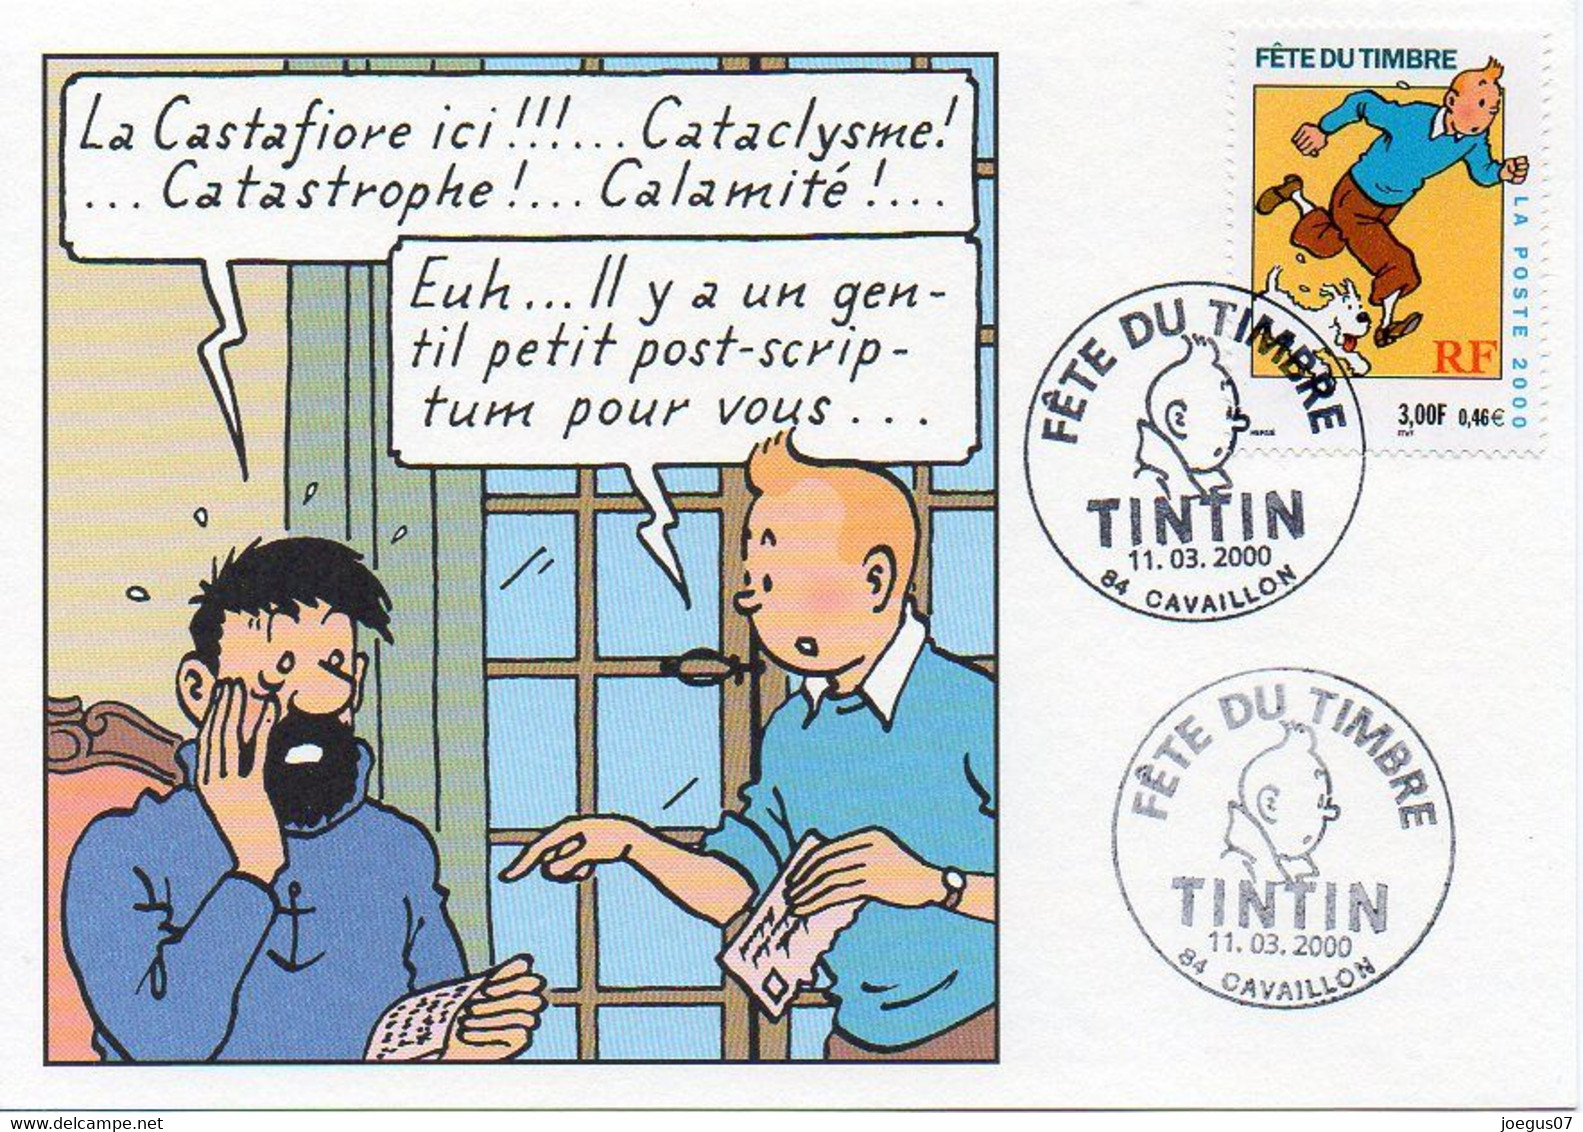 Fête Du Timbre 2000, TINTIN, Milou Et Capitaine, La Castafiore Ici!!! Cataclysme! Catastrophe! 11.03.2000 84 CAVAILLON - Comicfiguren